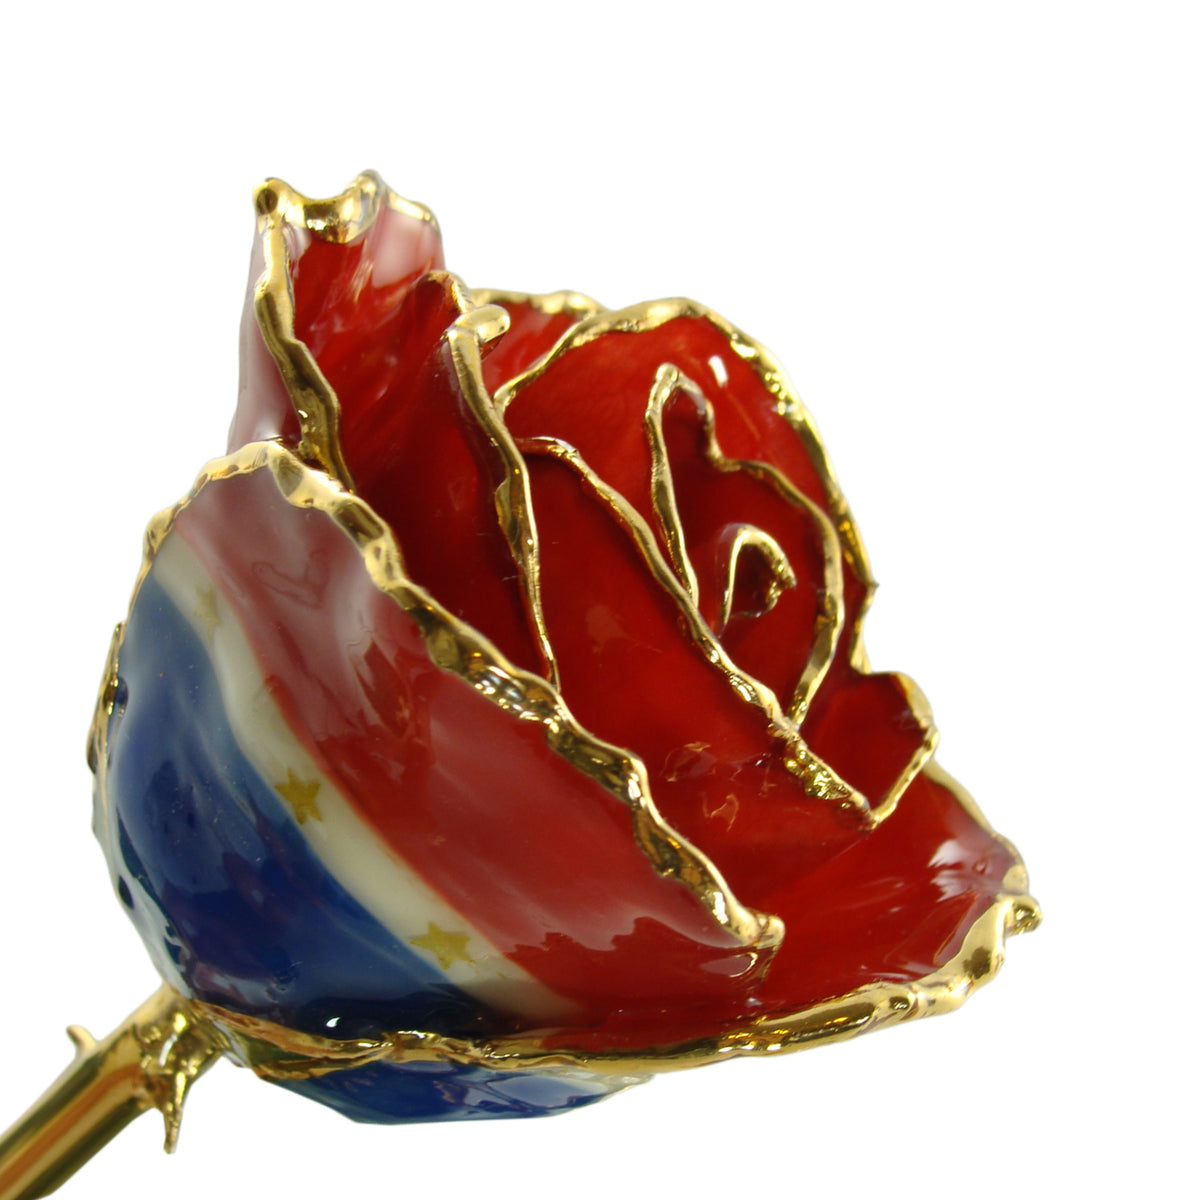 24K Gold Forever Rose - The Patriot Rose